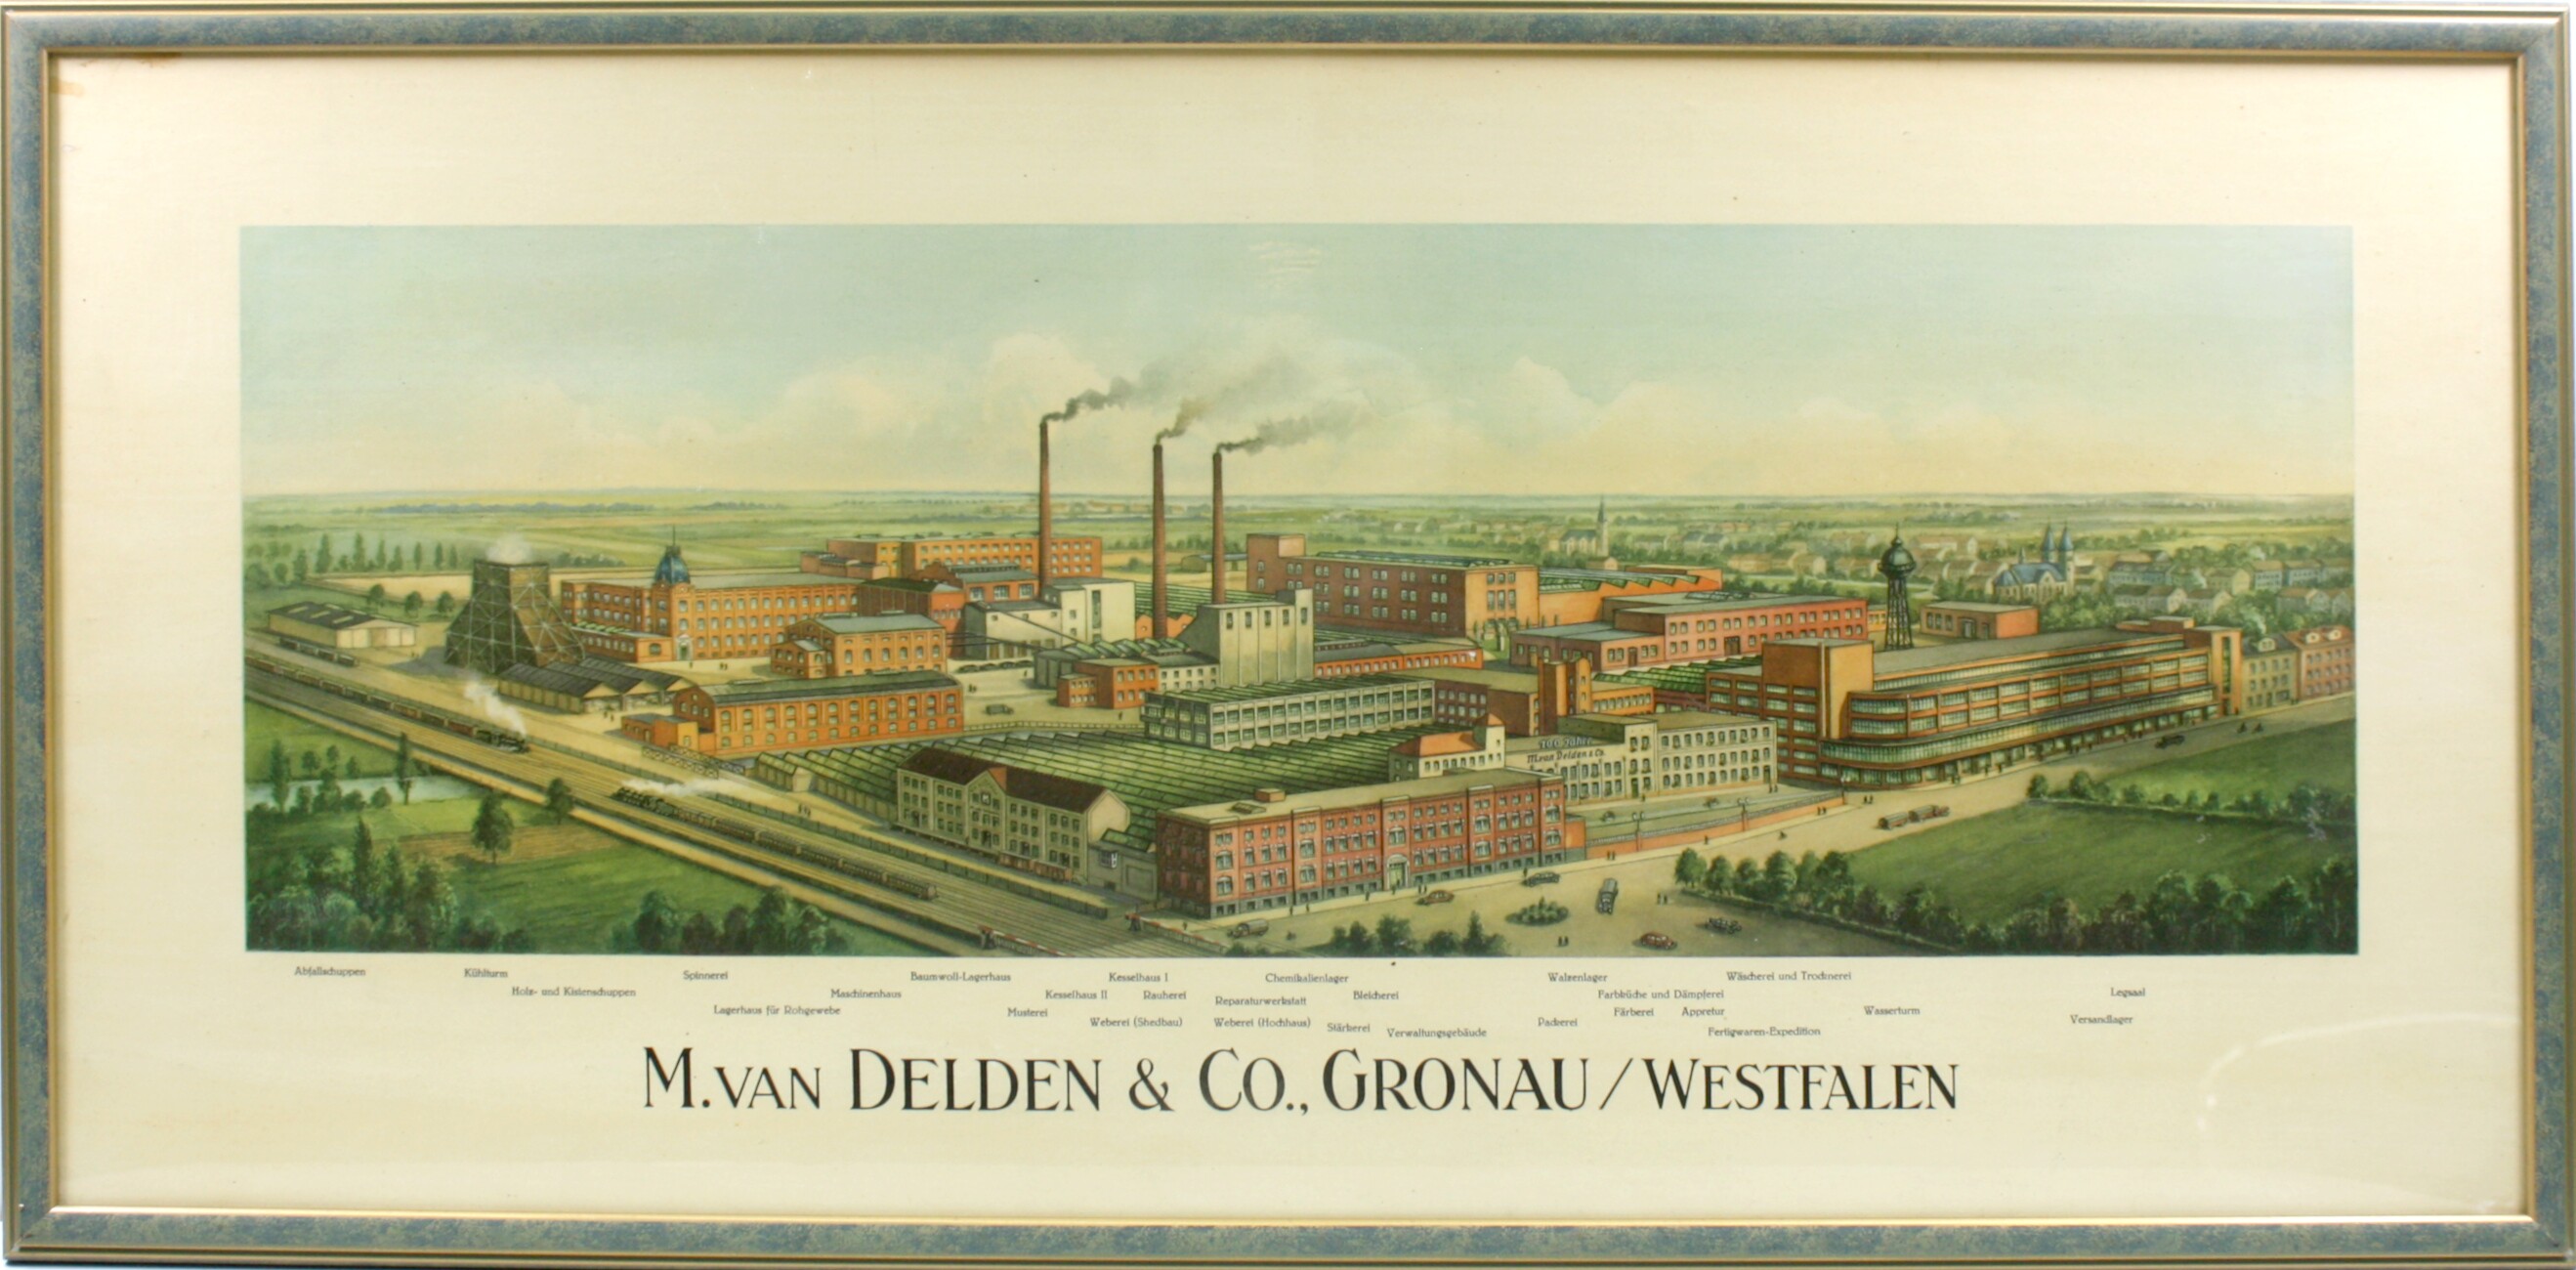 Farbdruck: Panoramaansicht "M. van Delden & Co., Gronau / Westfalen" (Drilandmuseum CC BY-NC-SA)